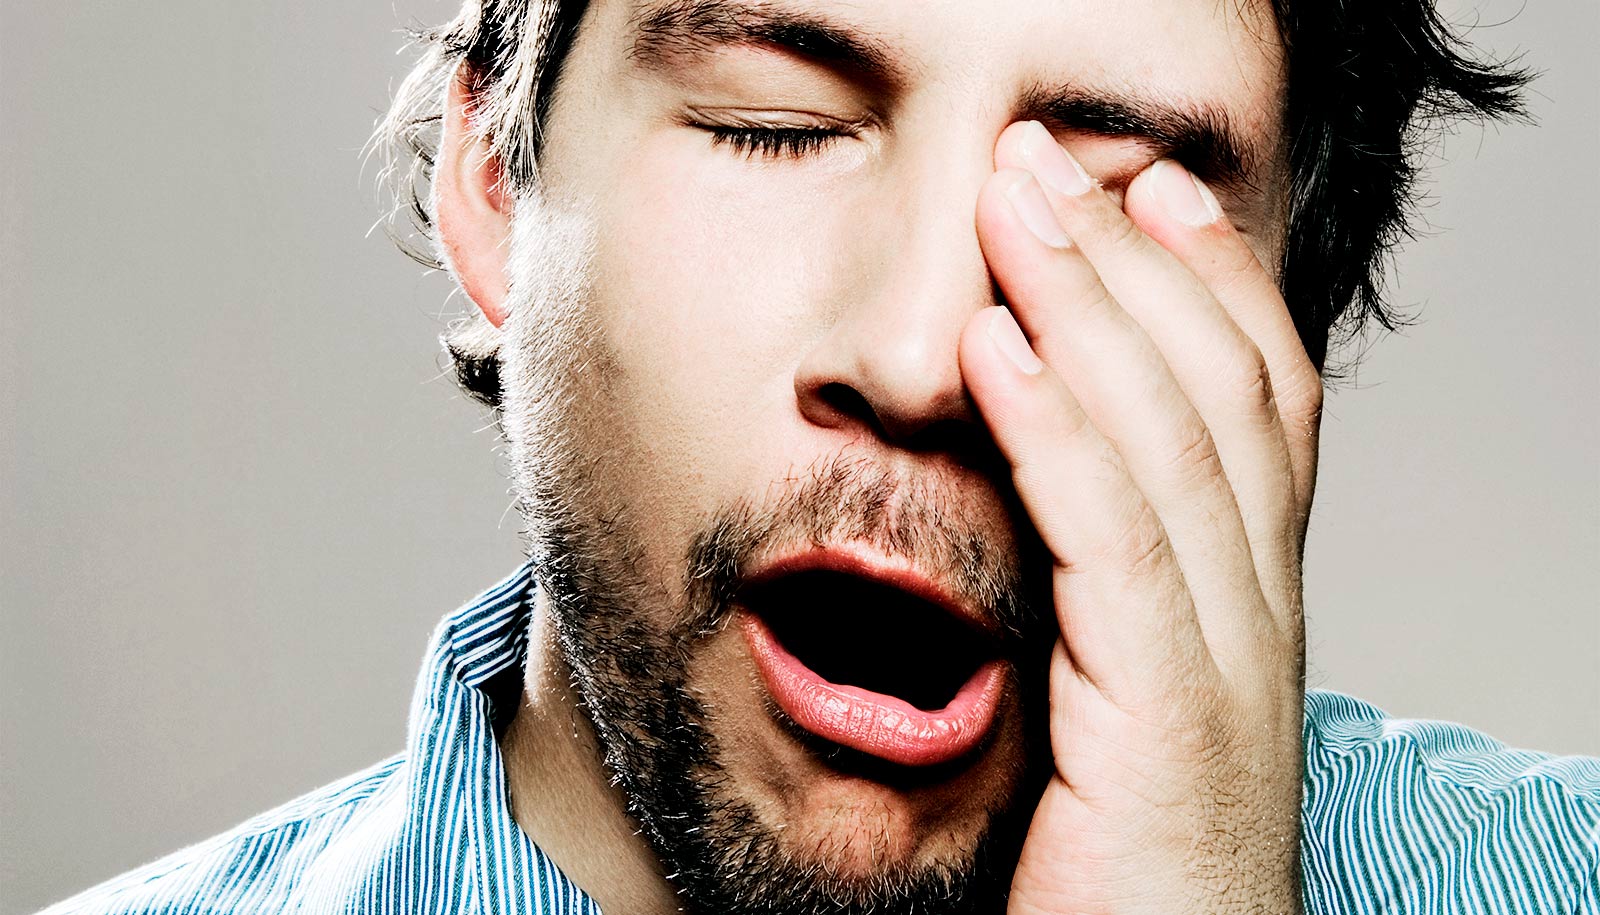 A man yawns and rubs his eye.